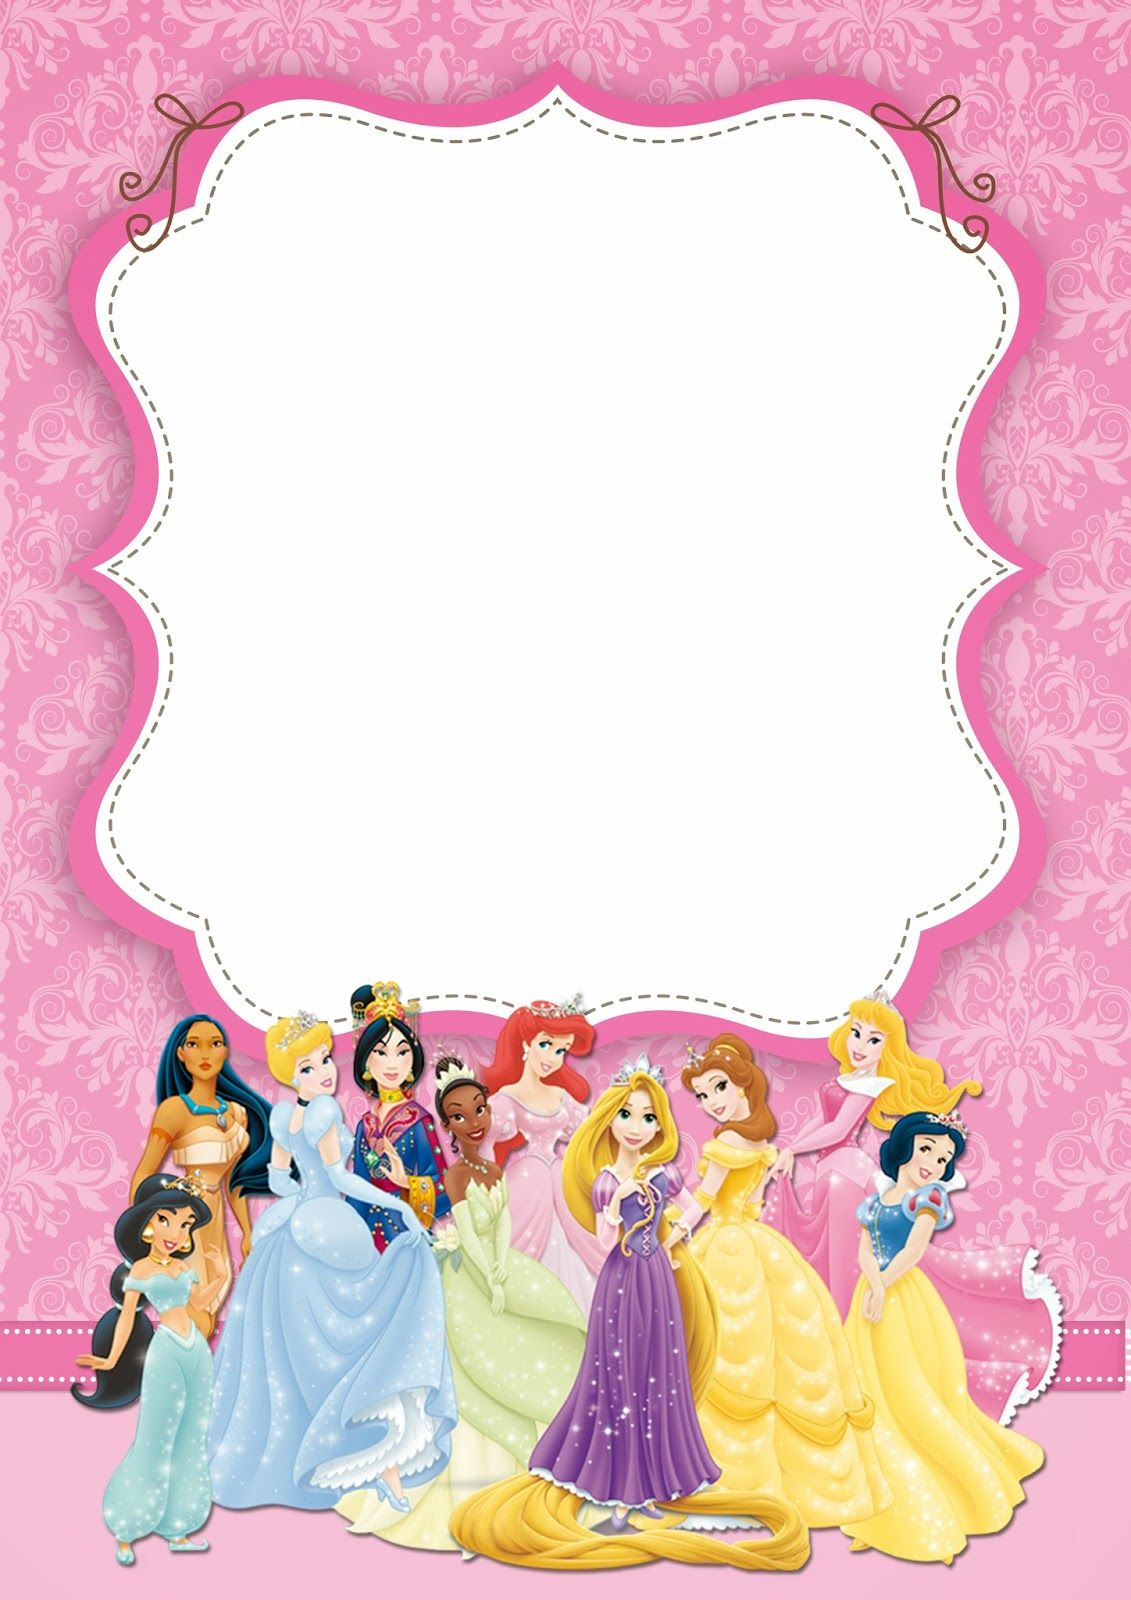 Disney Princess Party: Free Printable Party Invitations. | Oh My - Free Printable Disney Invitations